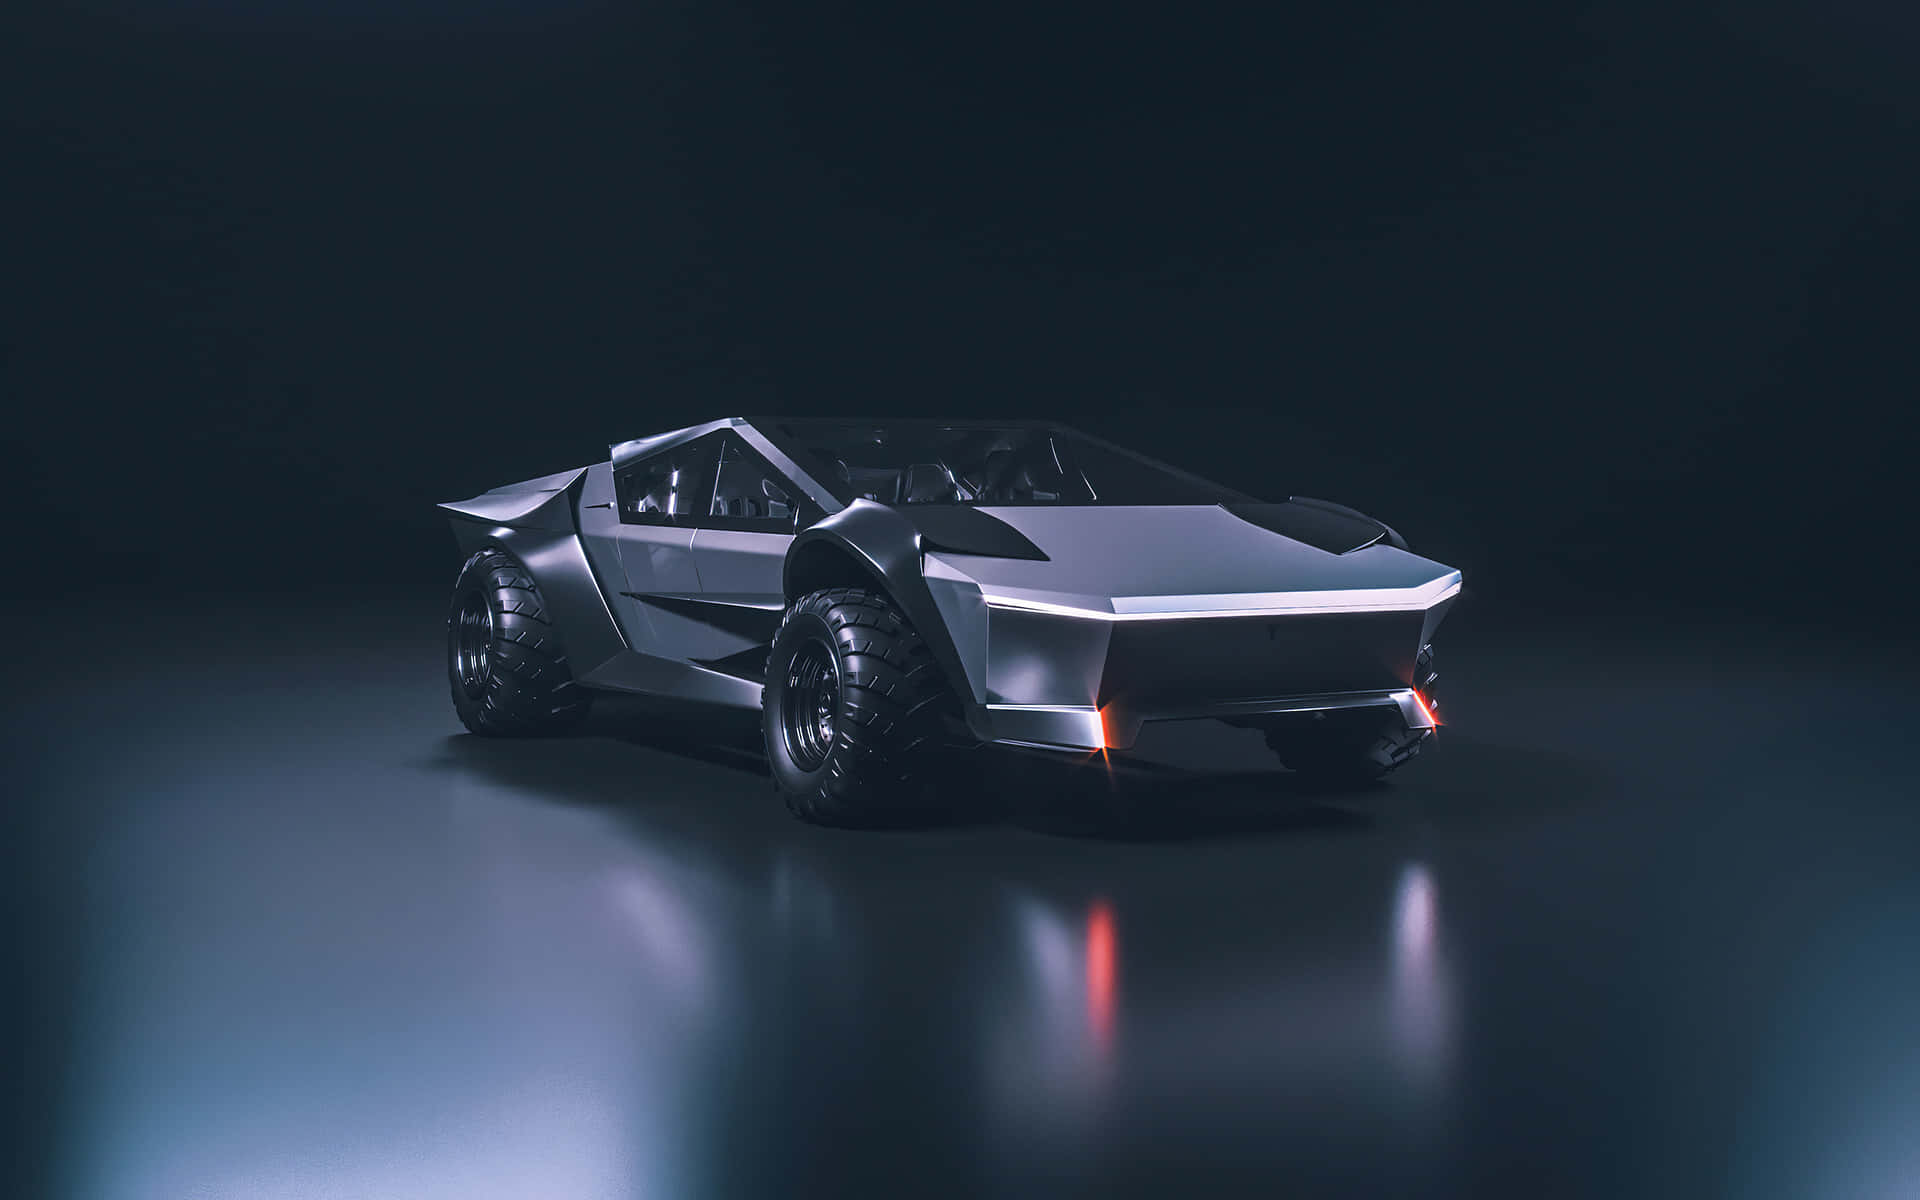 A Futuristic Car Is Shown In A Dark Room